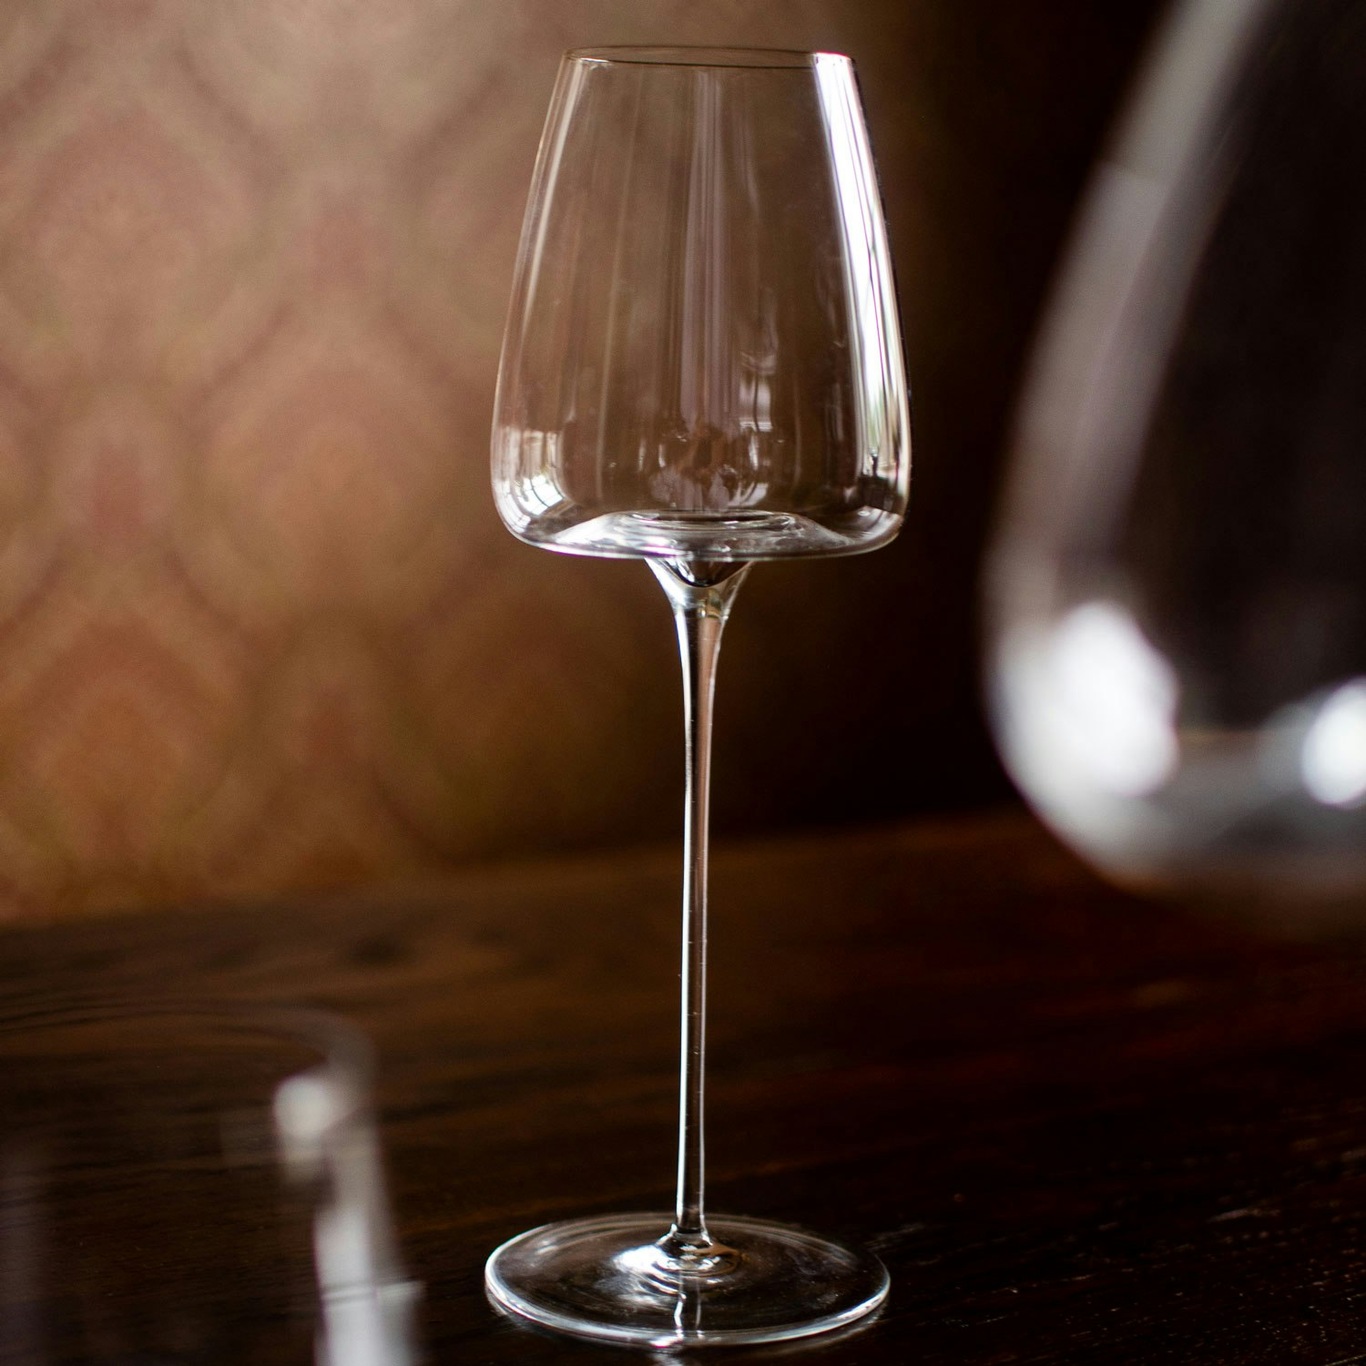 https://royaldesign.com/image/2/zieher-vision-fresh-wine-glass-2-pack-10?w=800&quality=80